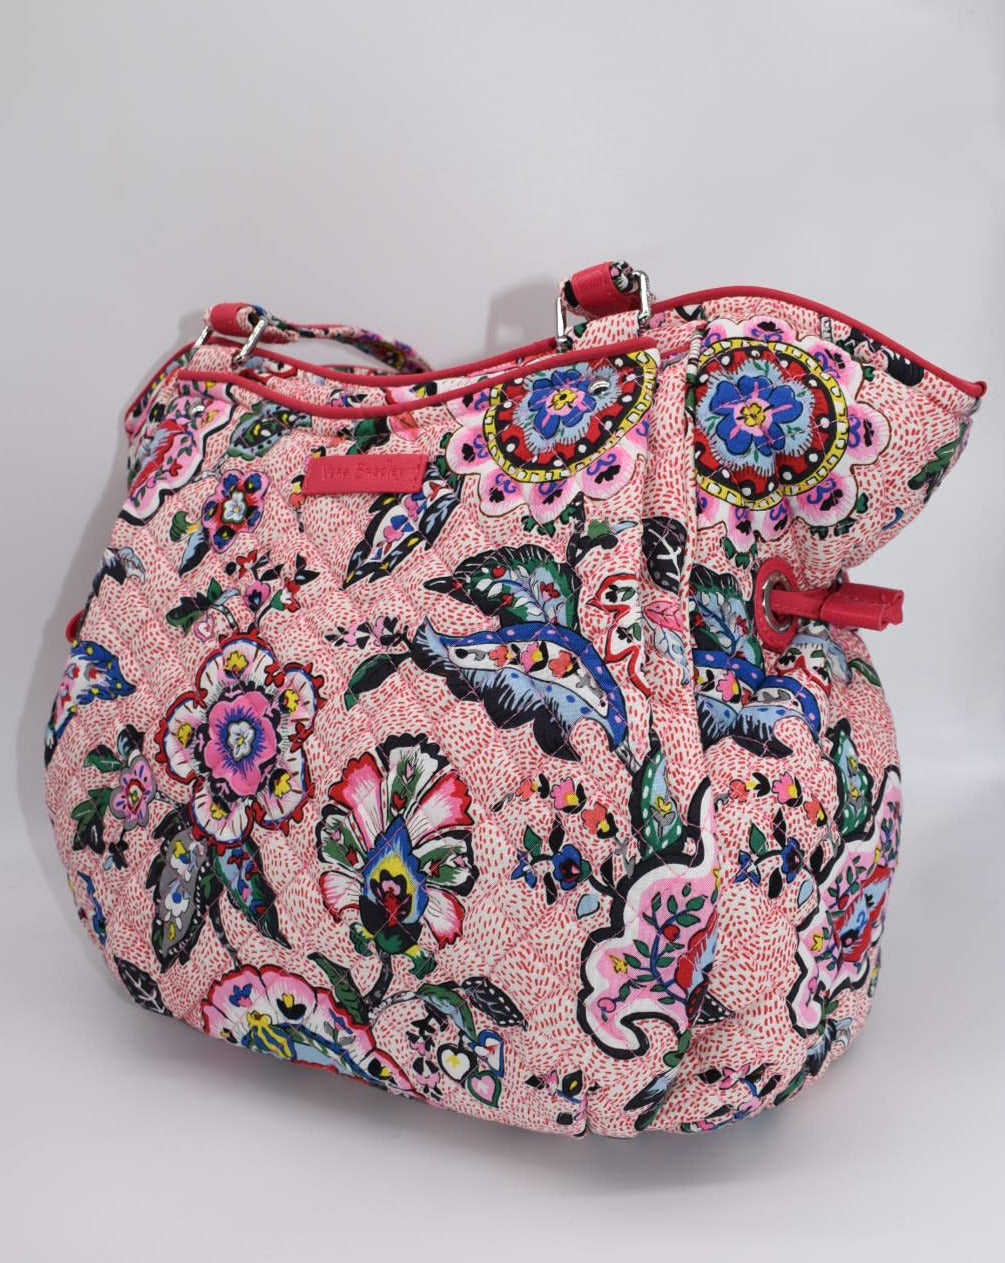 Vera Bradley Glenna Satchel Bag in "Stitched Flowers" Pattern